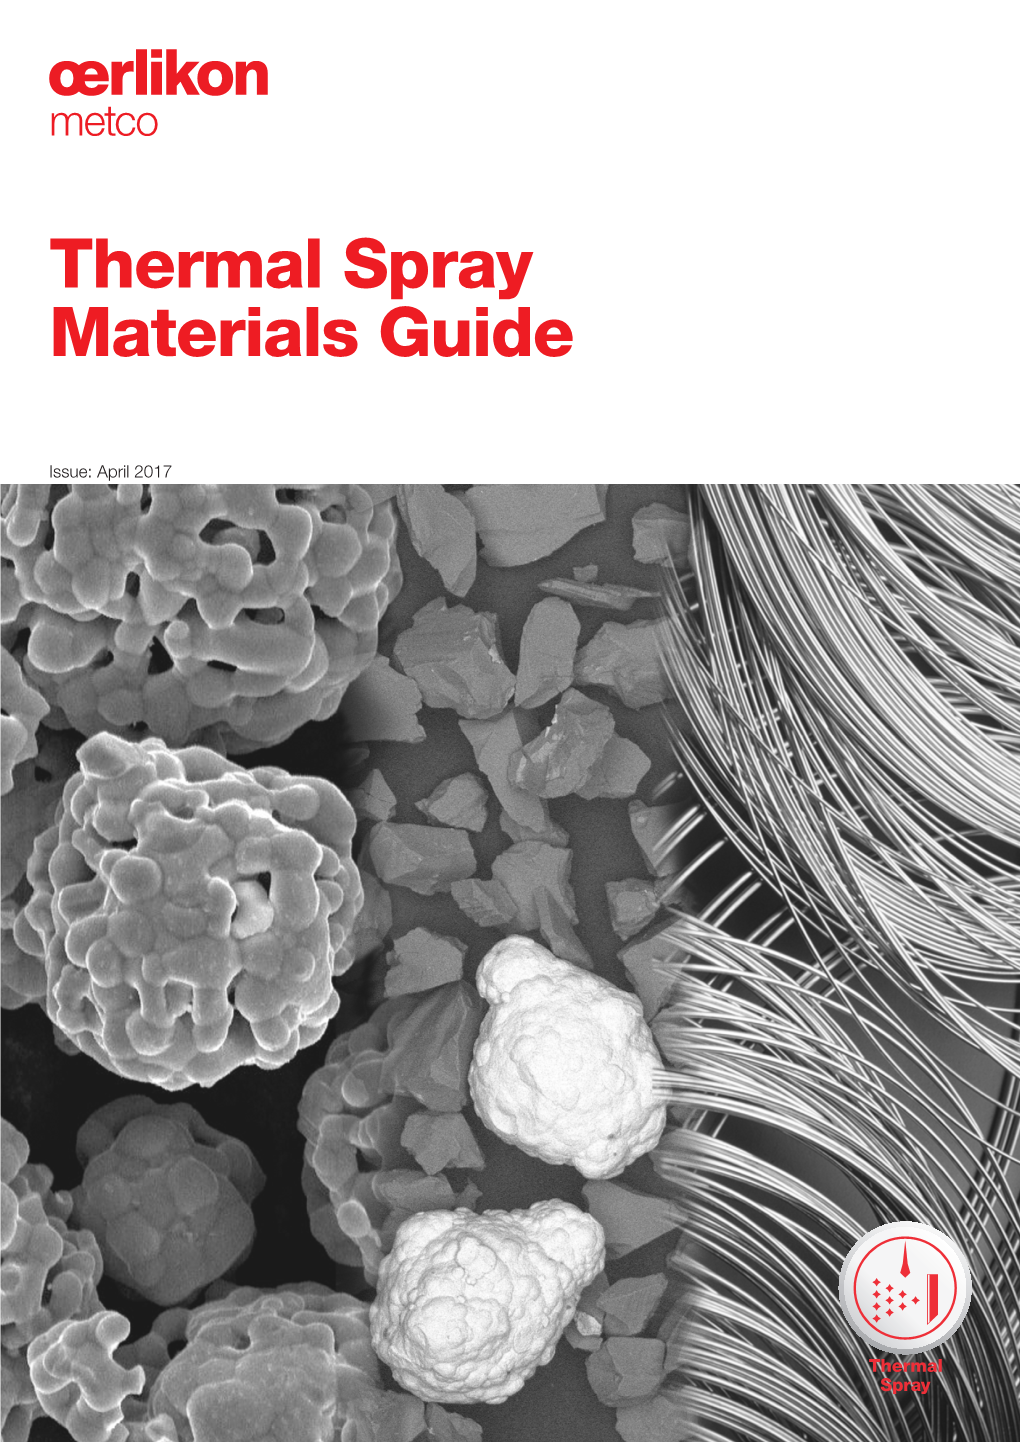 Oerlikon Metco Thermal Spray Materials Guide